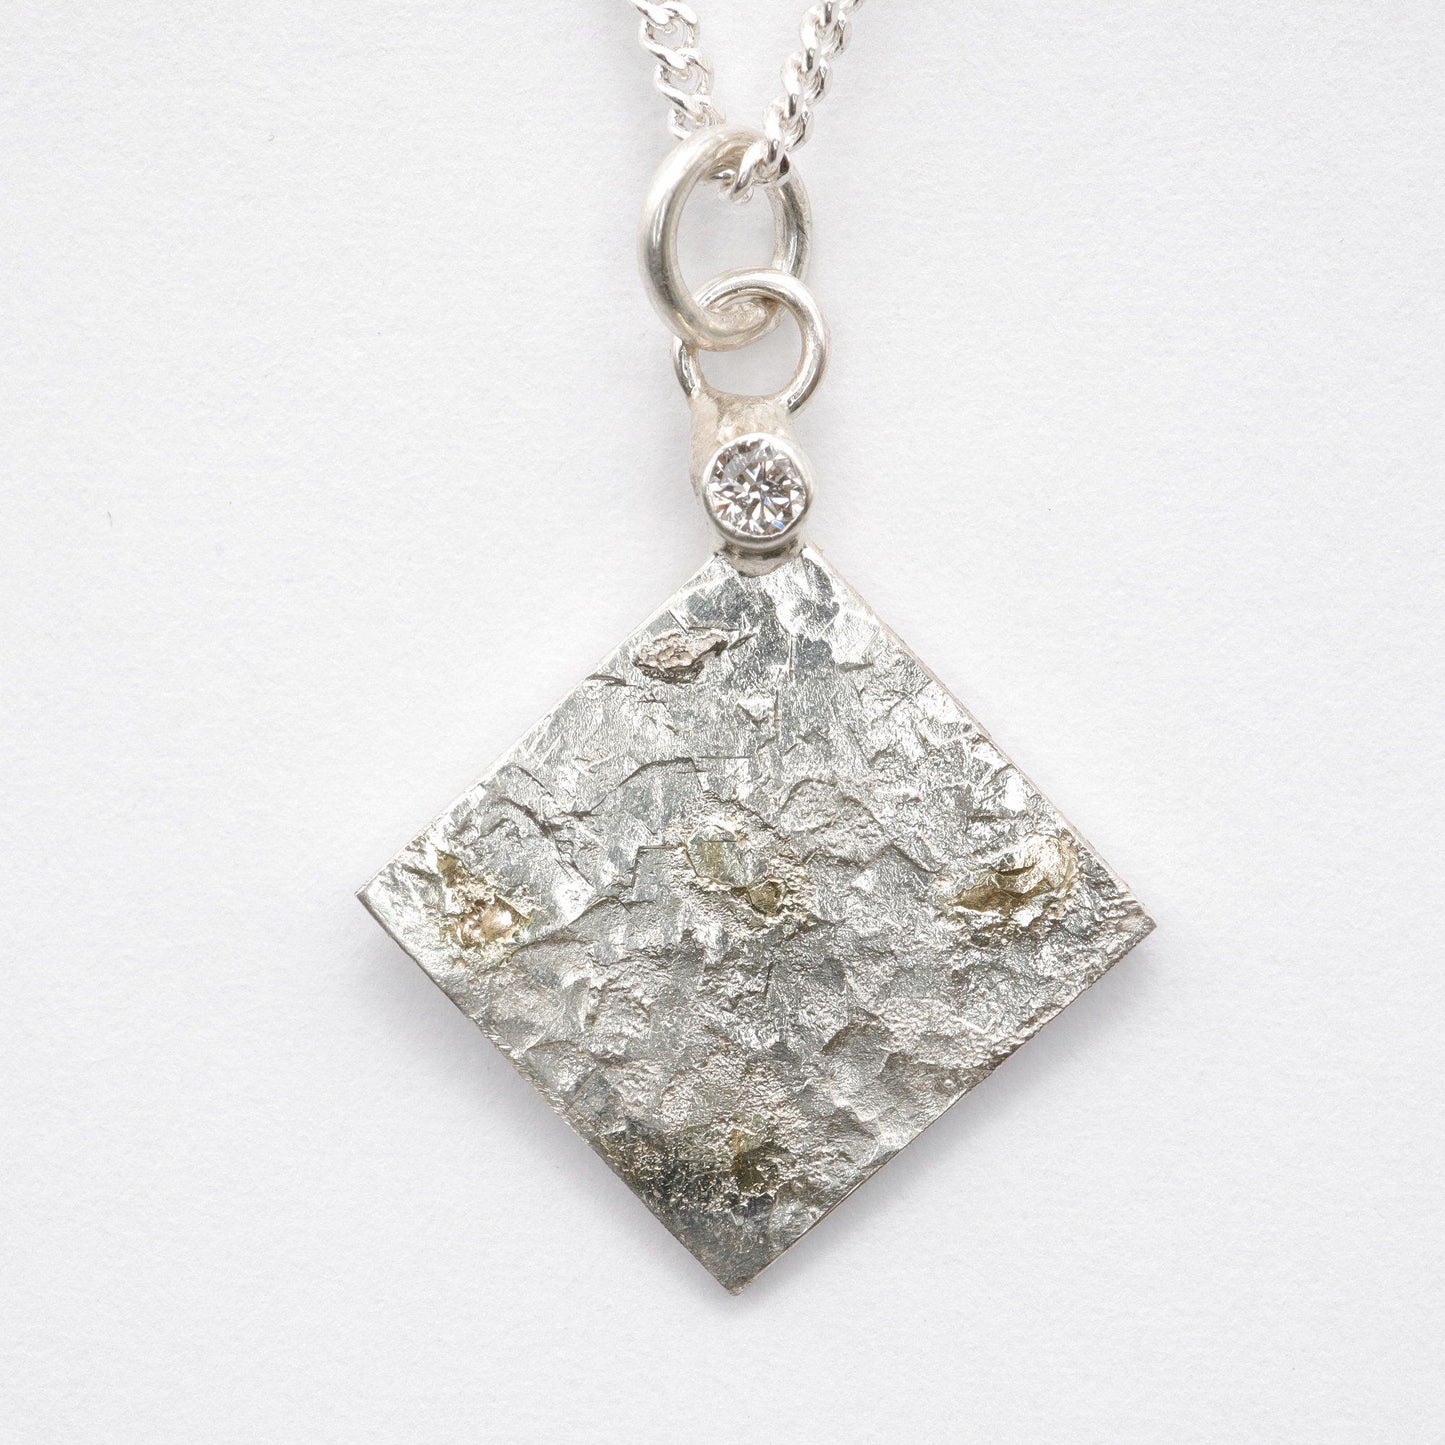 Diamond set silver and gold pendant, Sunrise Kite design